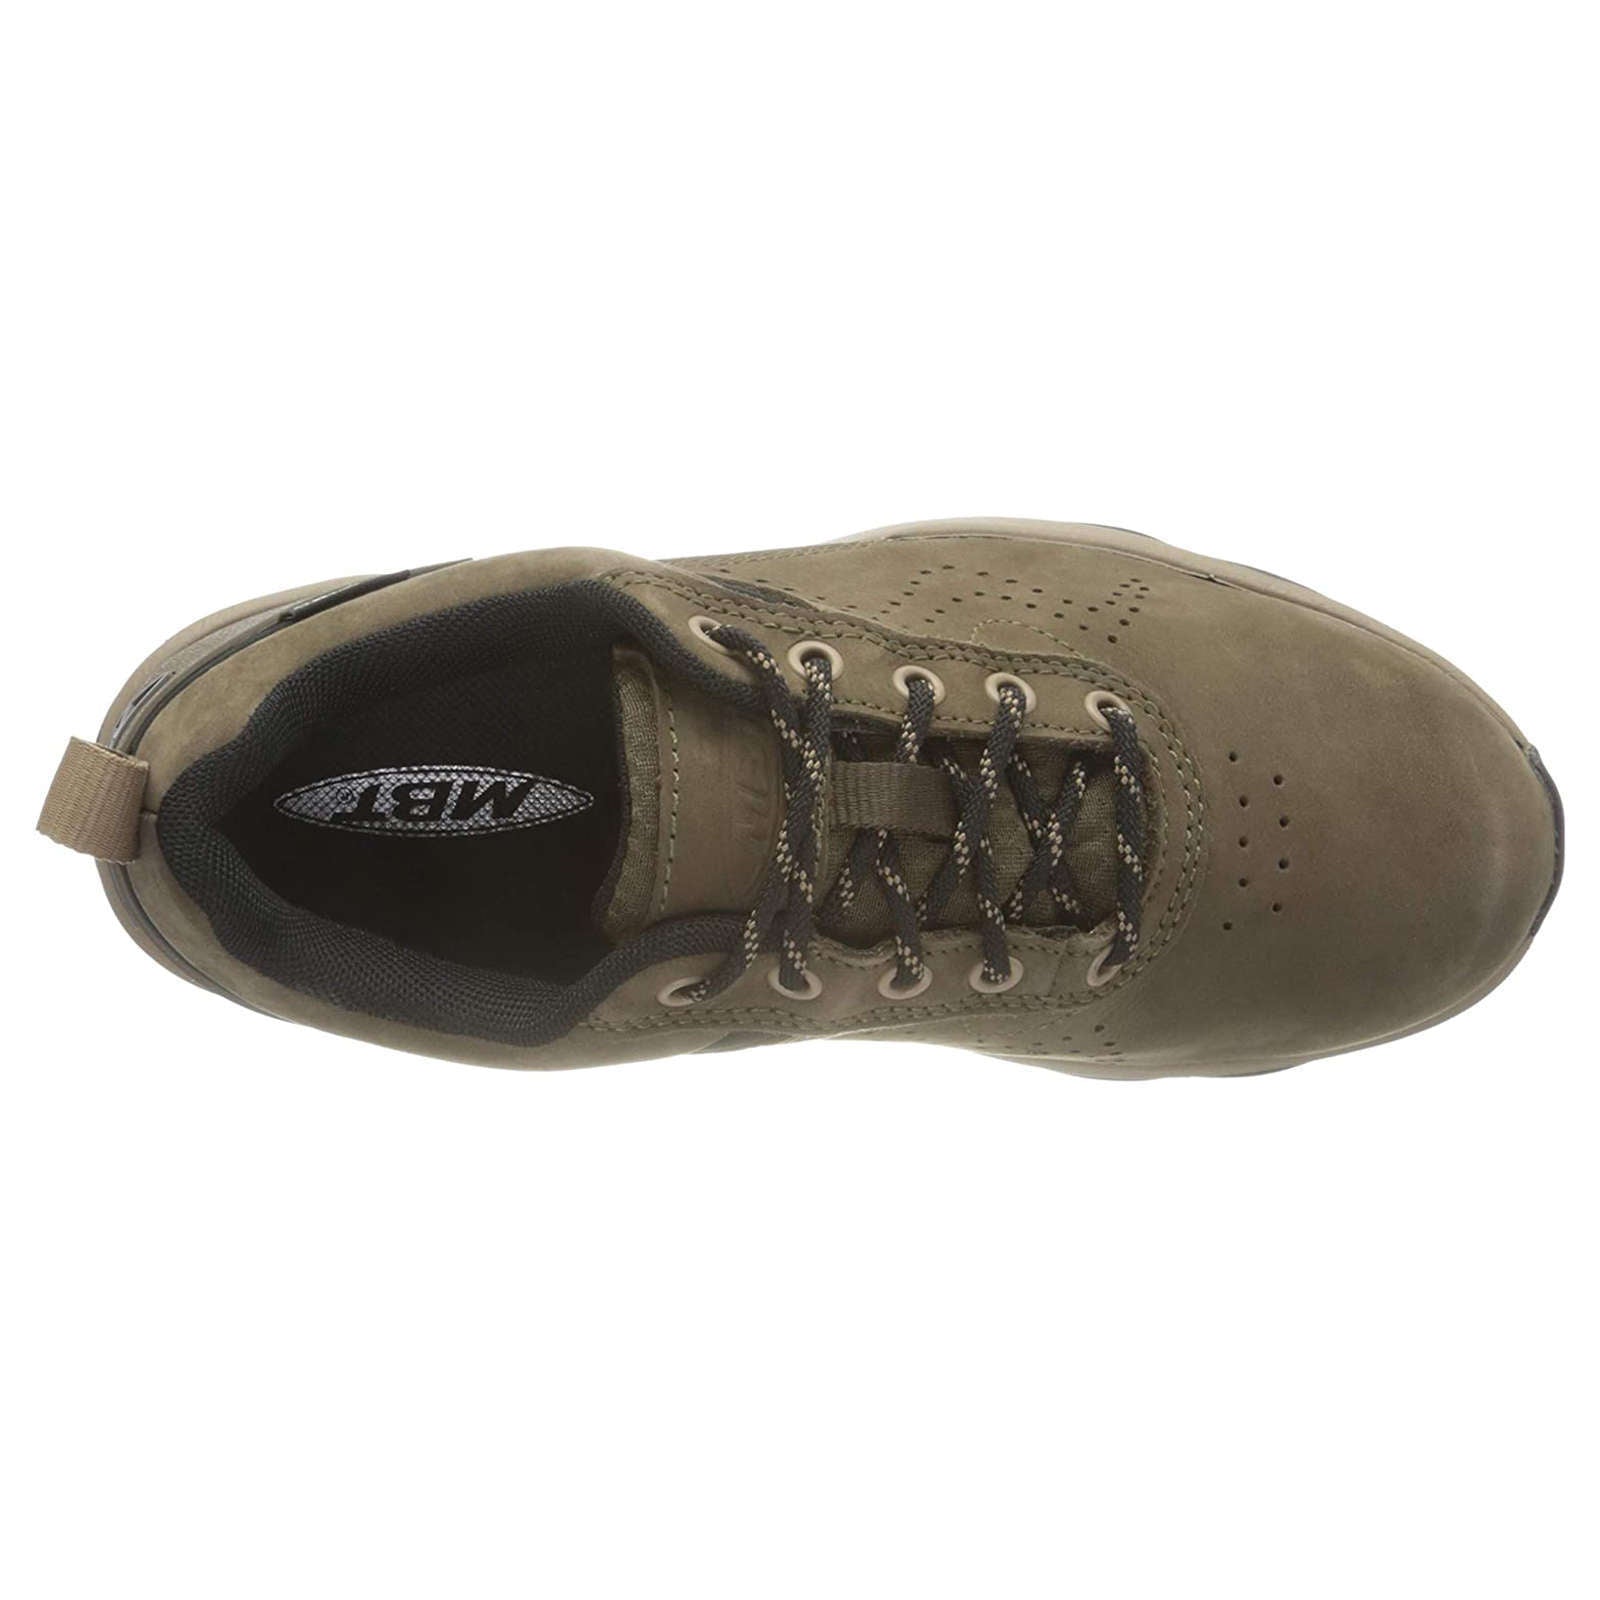 MBT Kibo GTX Waterproof Nubuck Leather Women's Hiking Shoes#color_brown